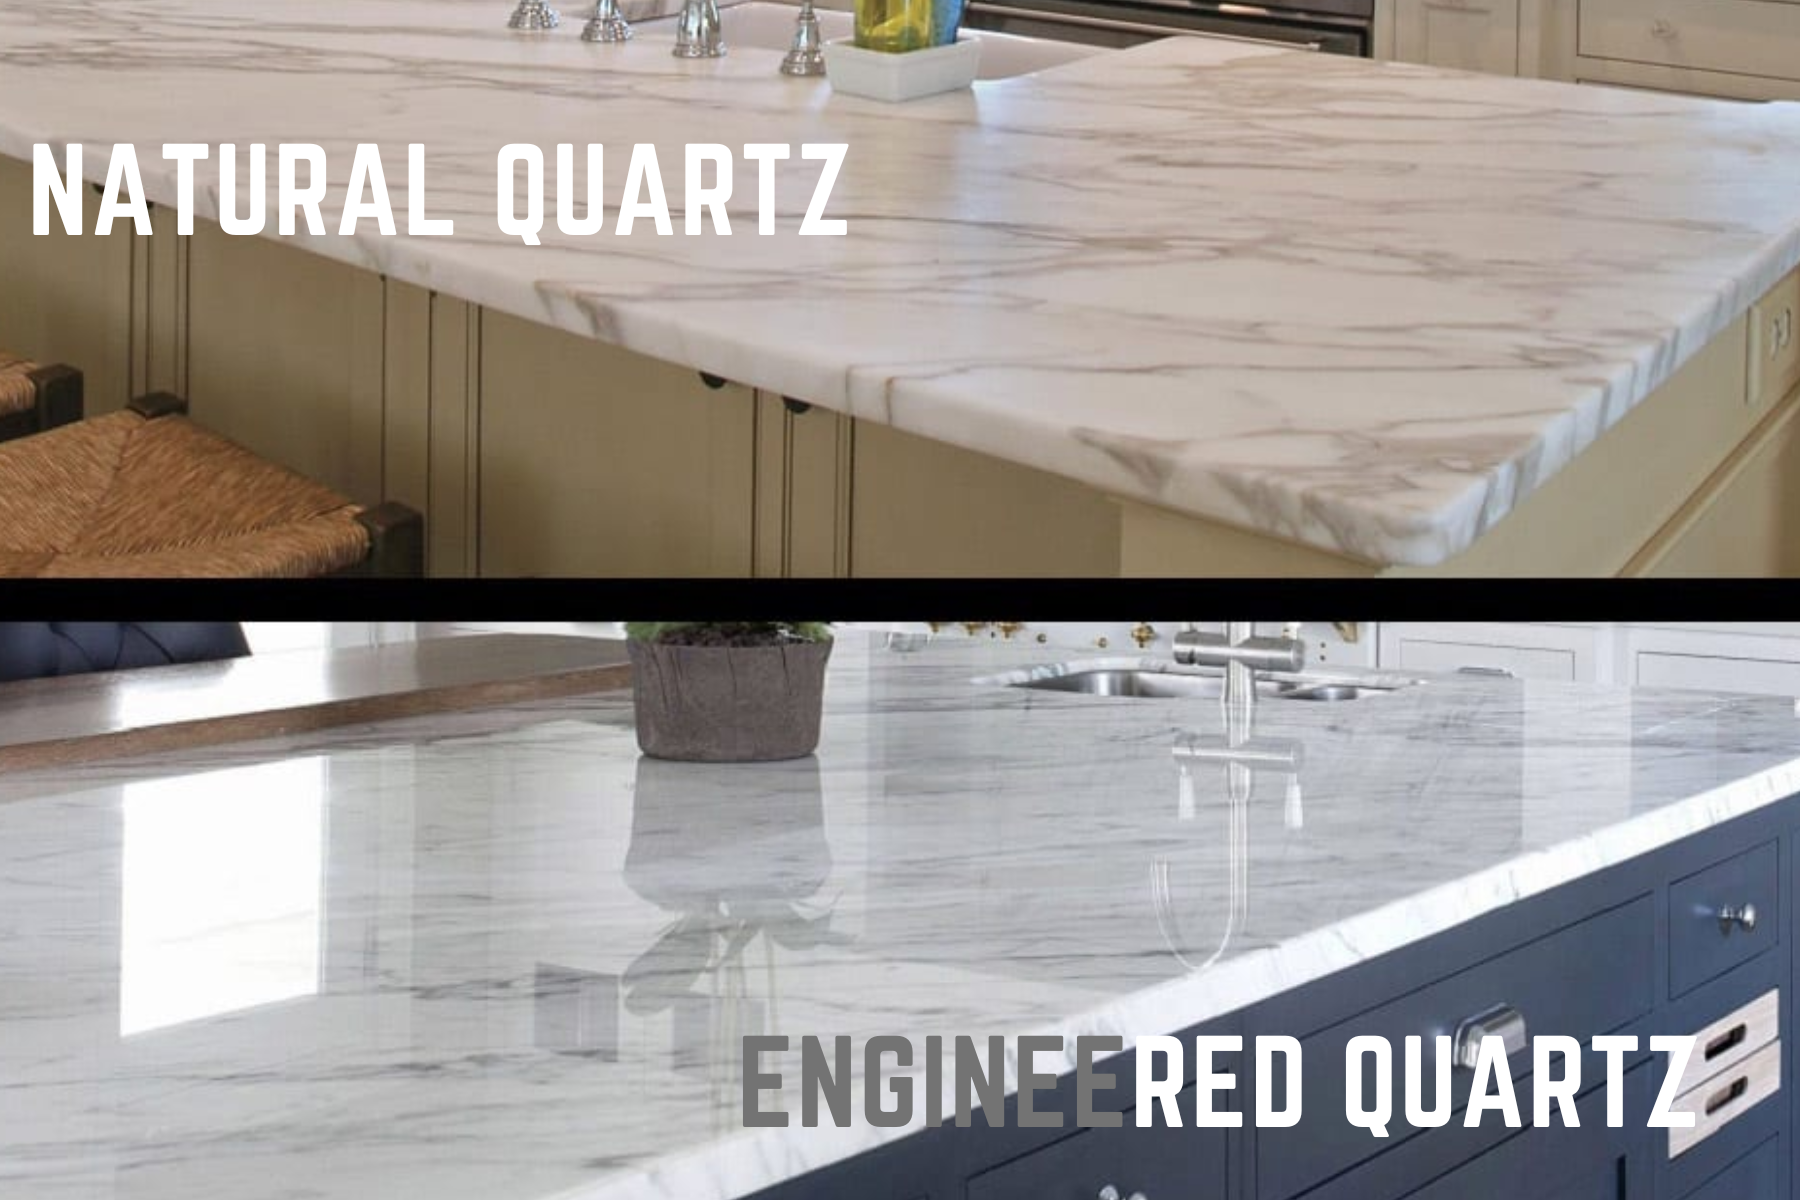 Natural Quartz Vs Engineered Quartz - Which Kind Is The Best?